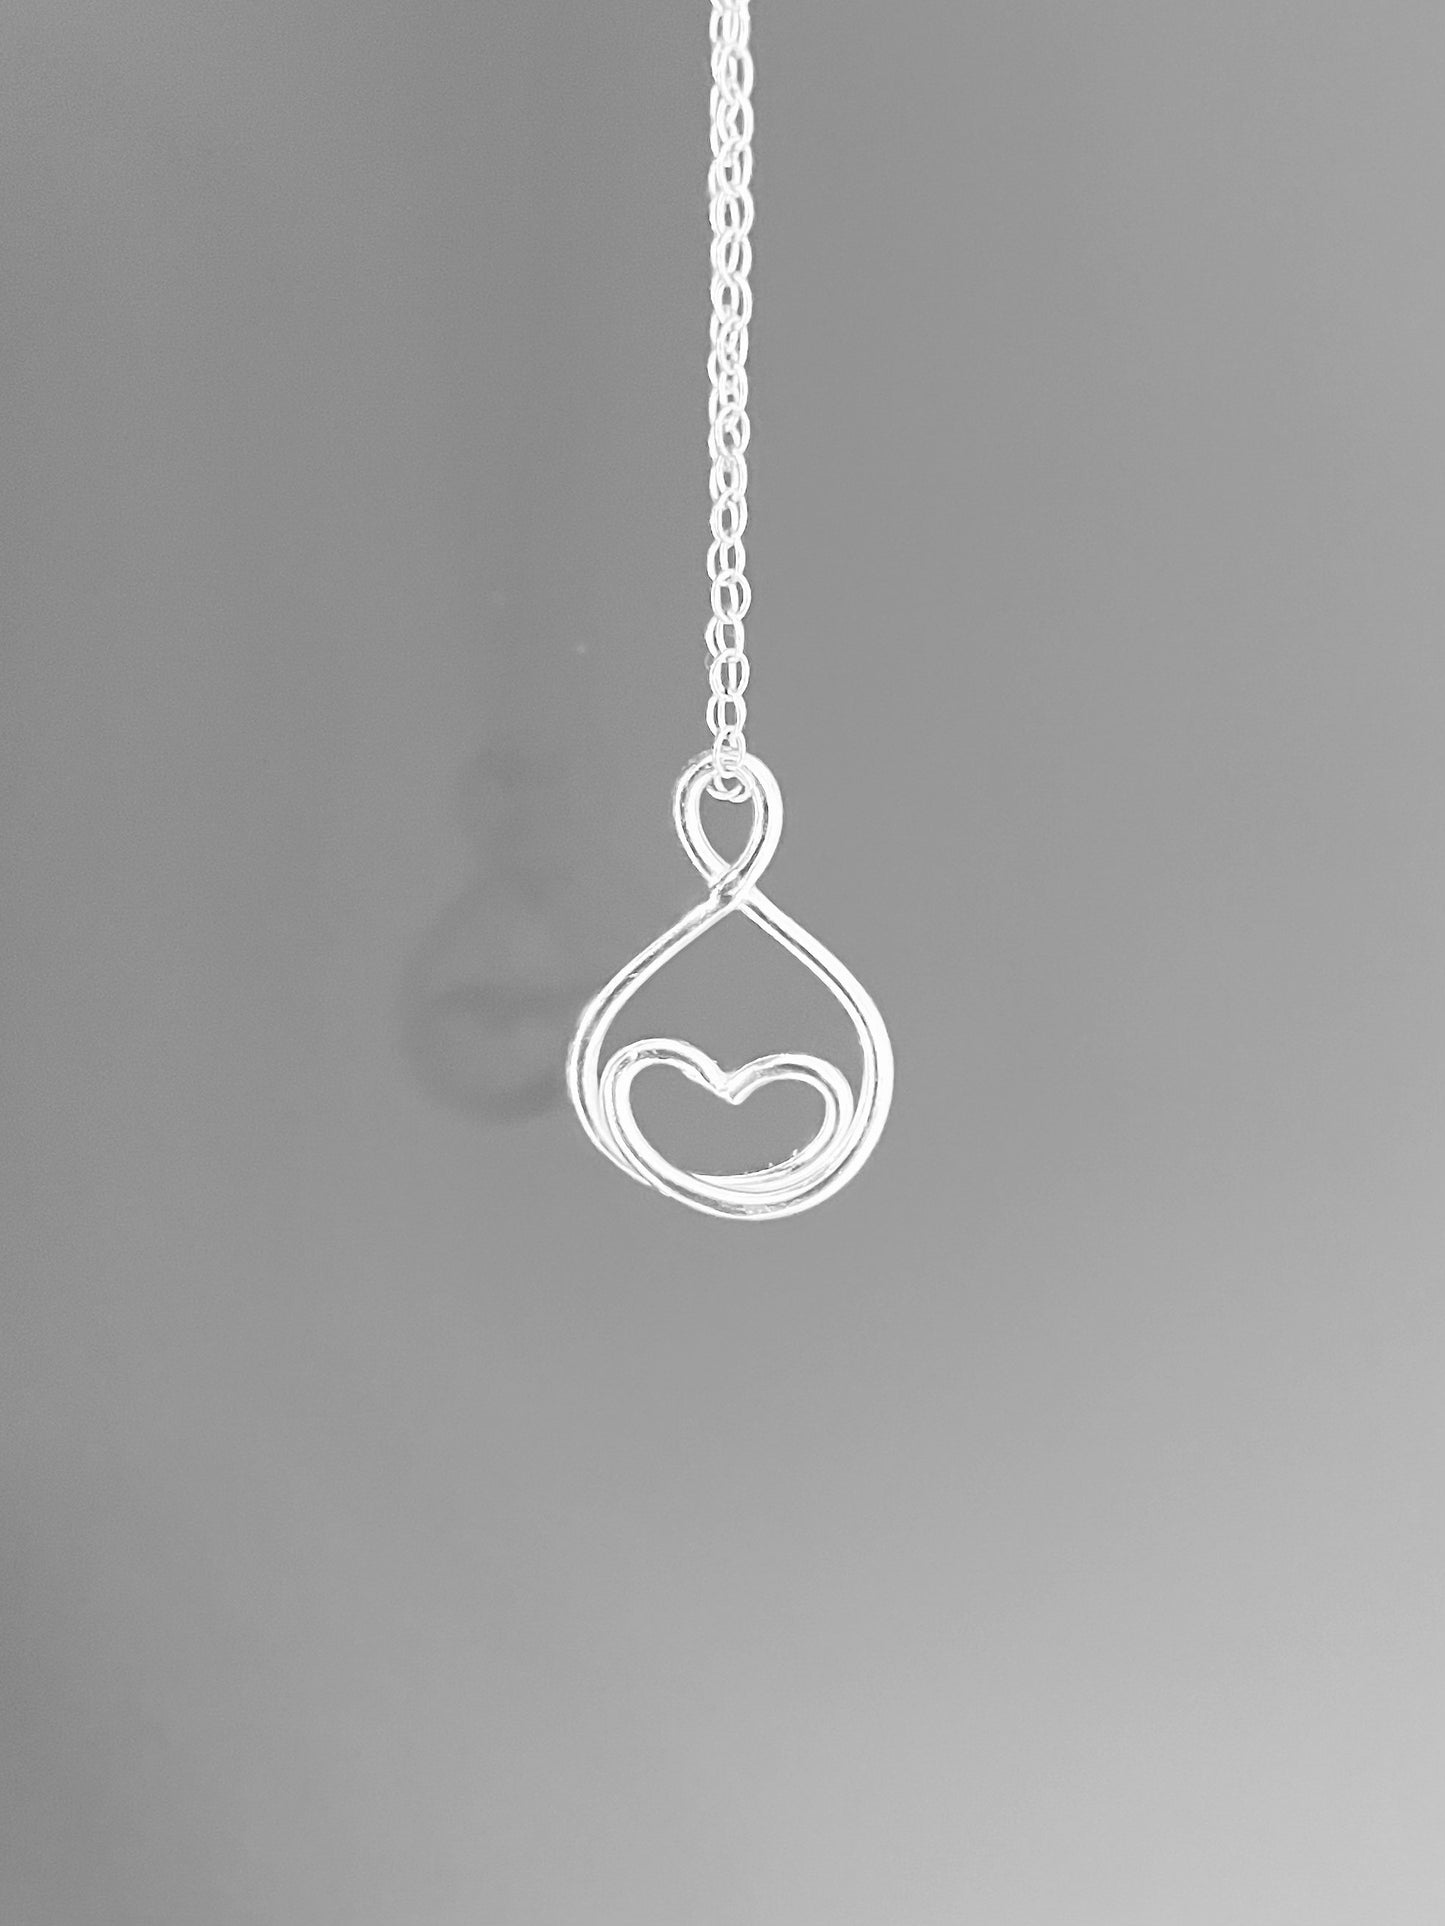 Self belief necklace, self love necklace